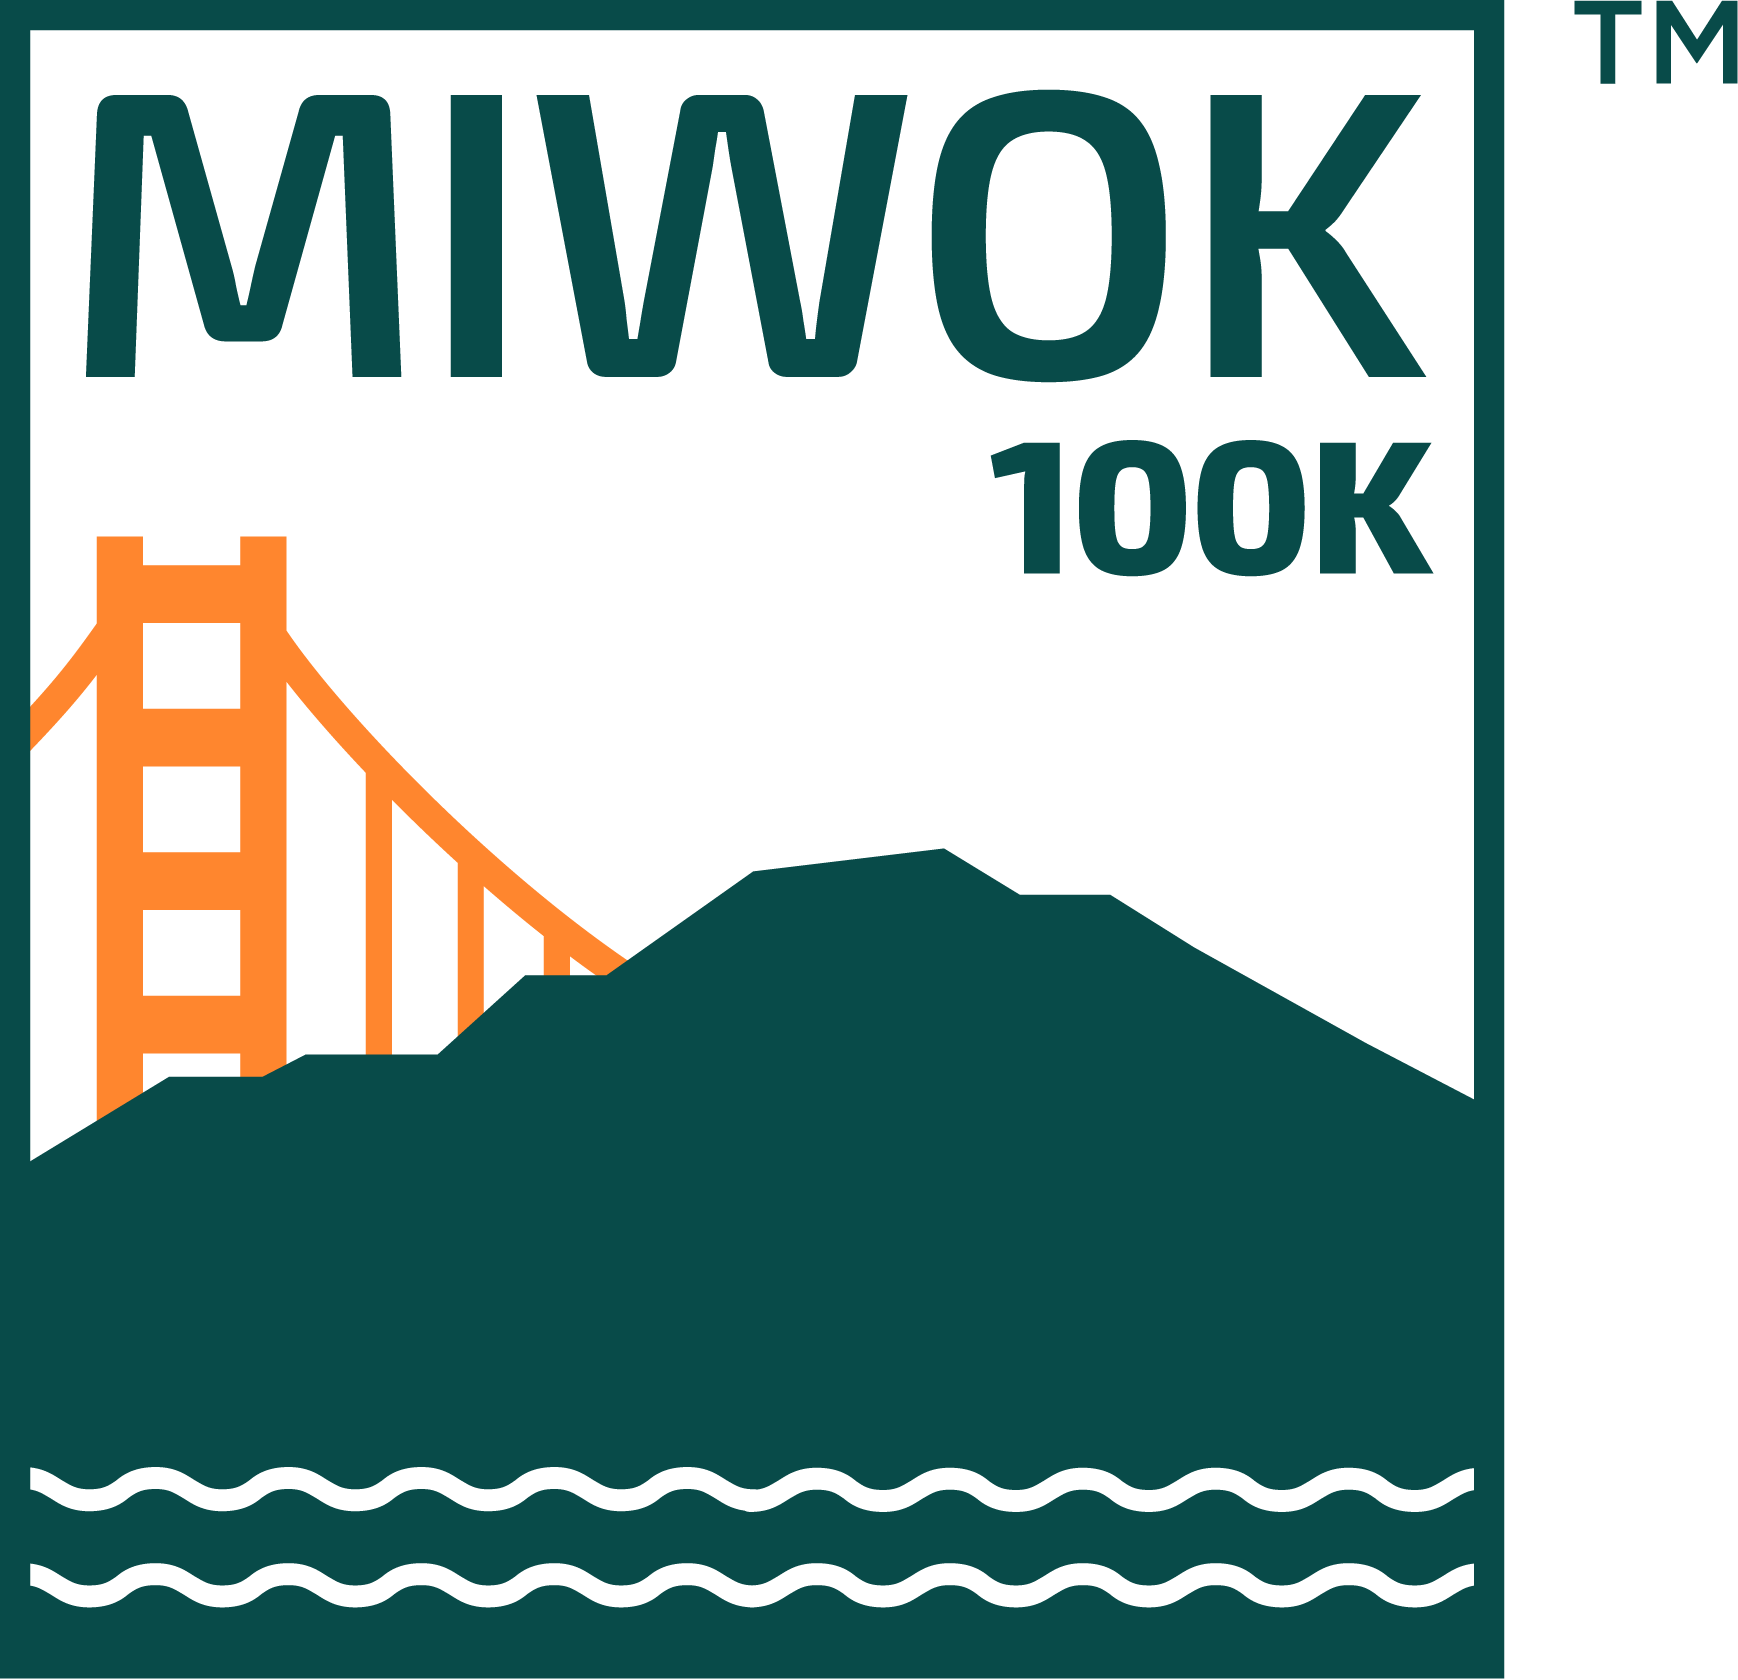 Miwok 100K Ultramarathon